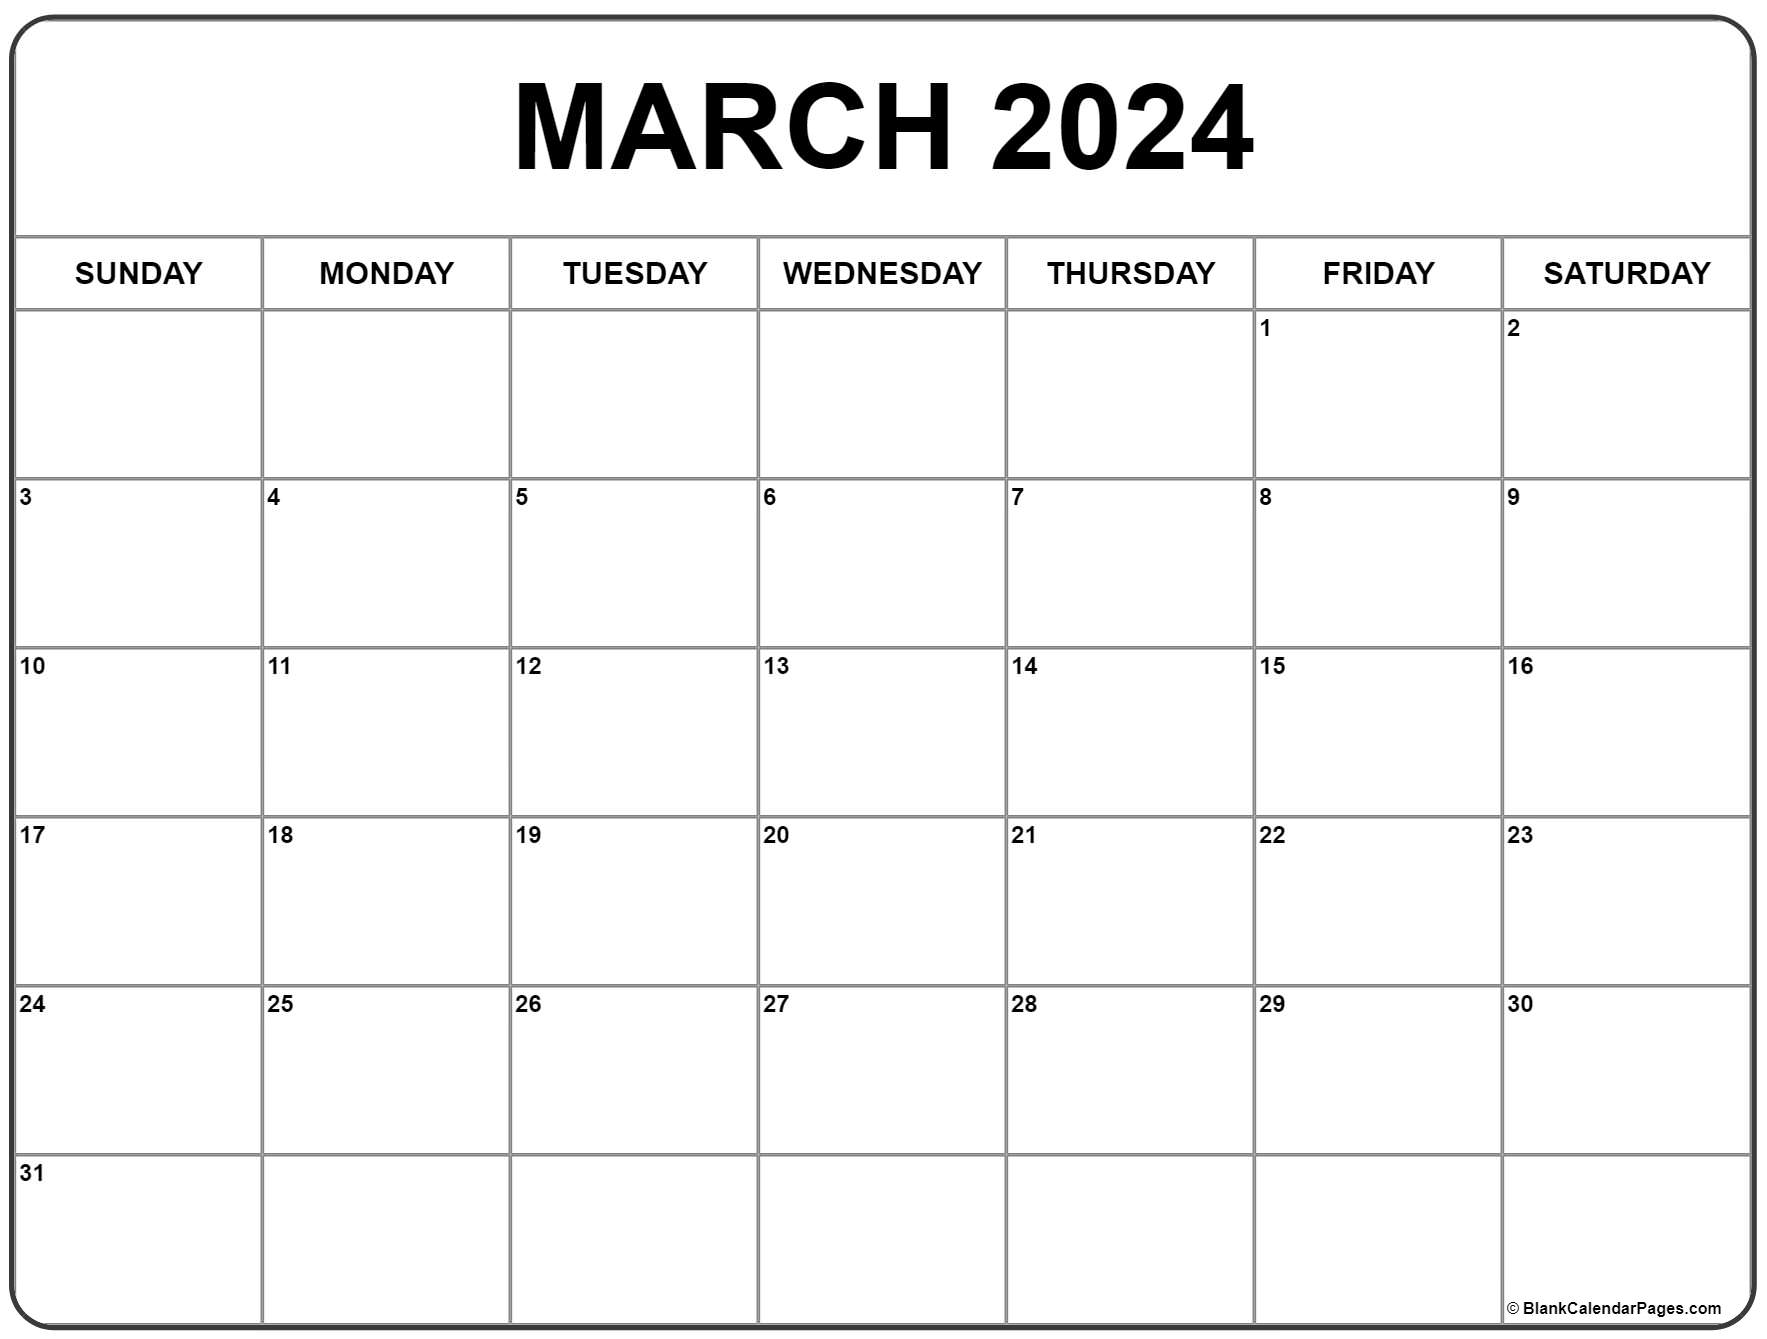 March 2024 Calendar | Free Printable Calendar for Calendar 2024 March And April Printable